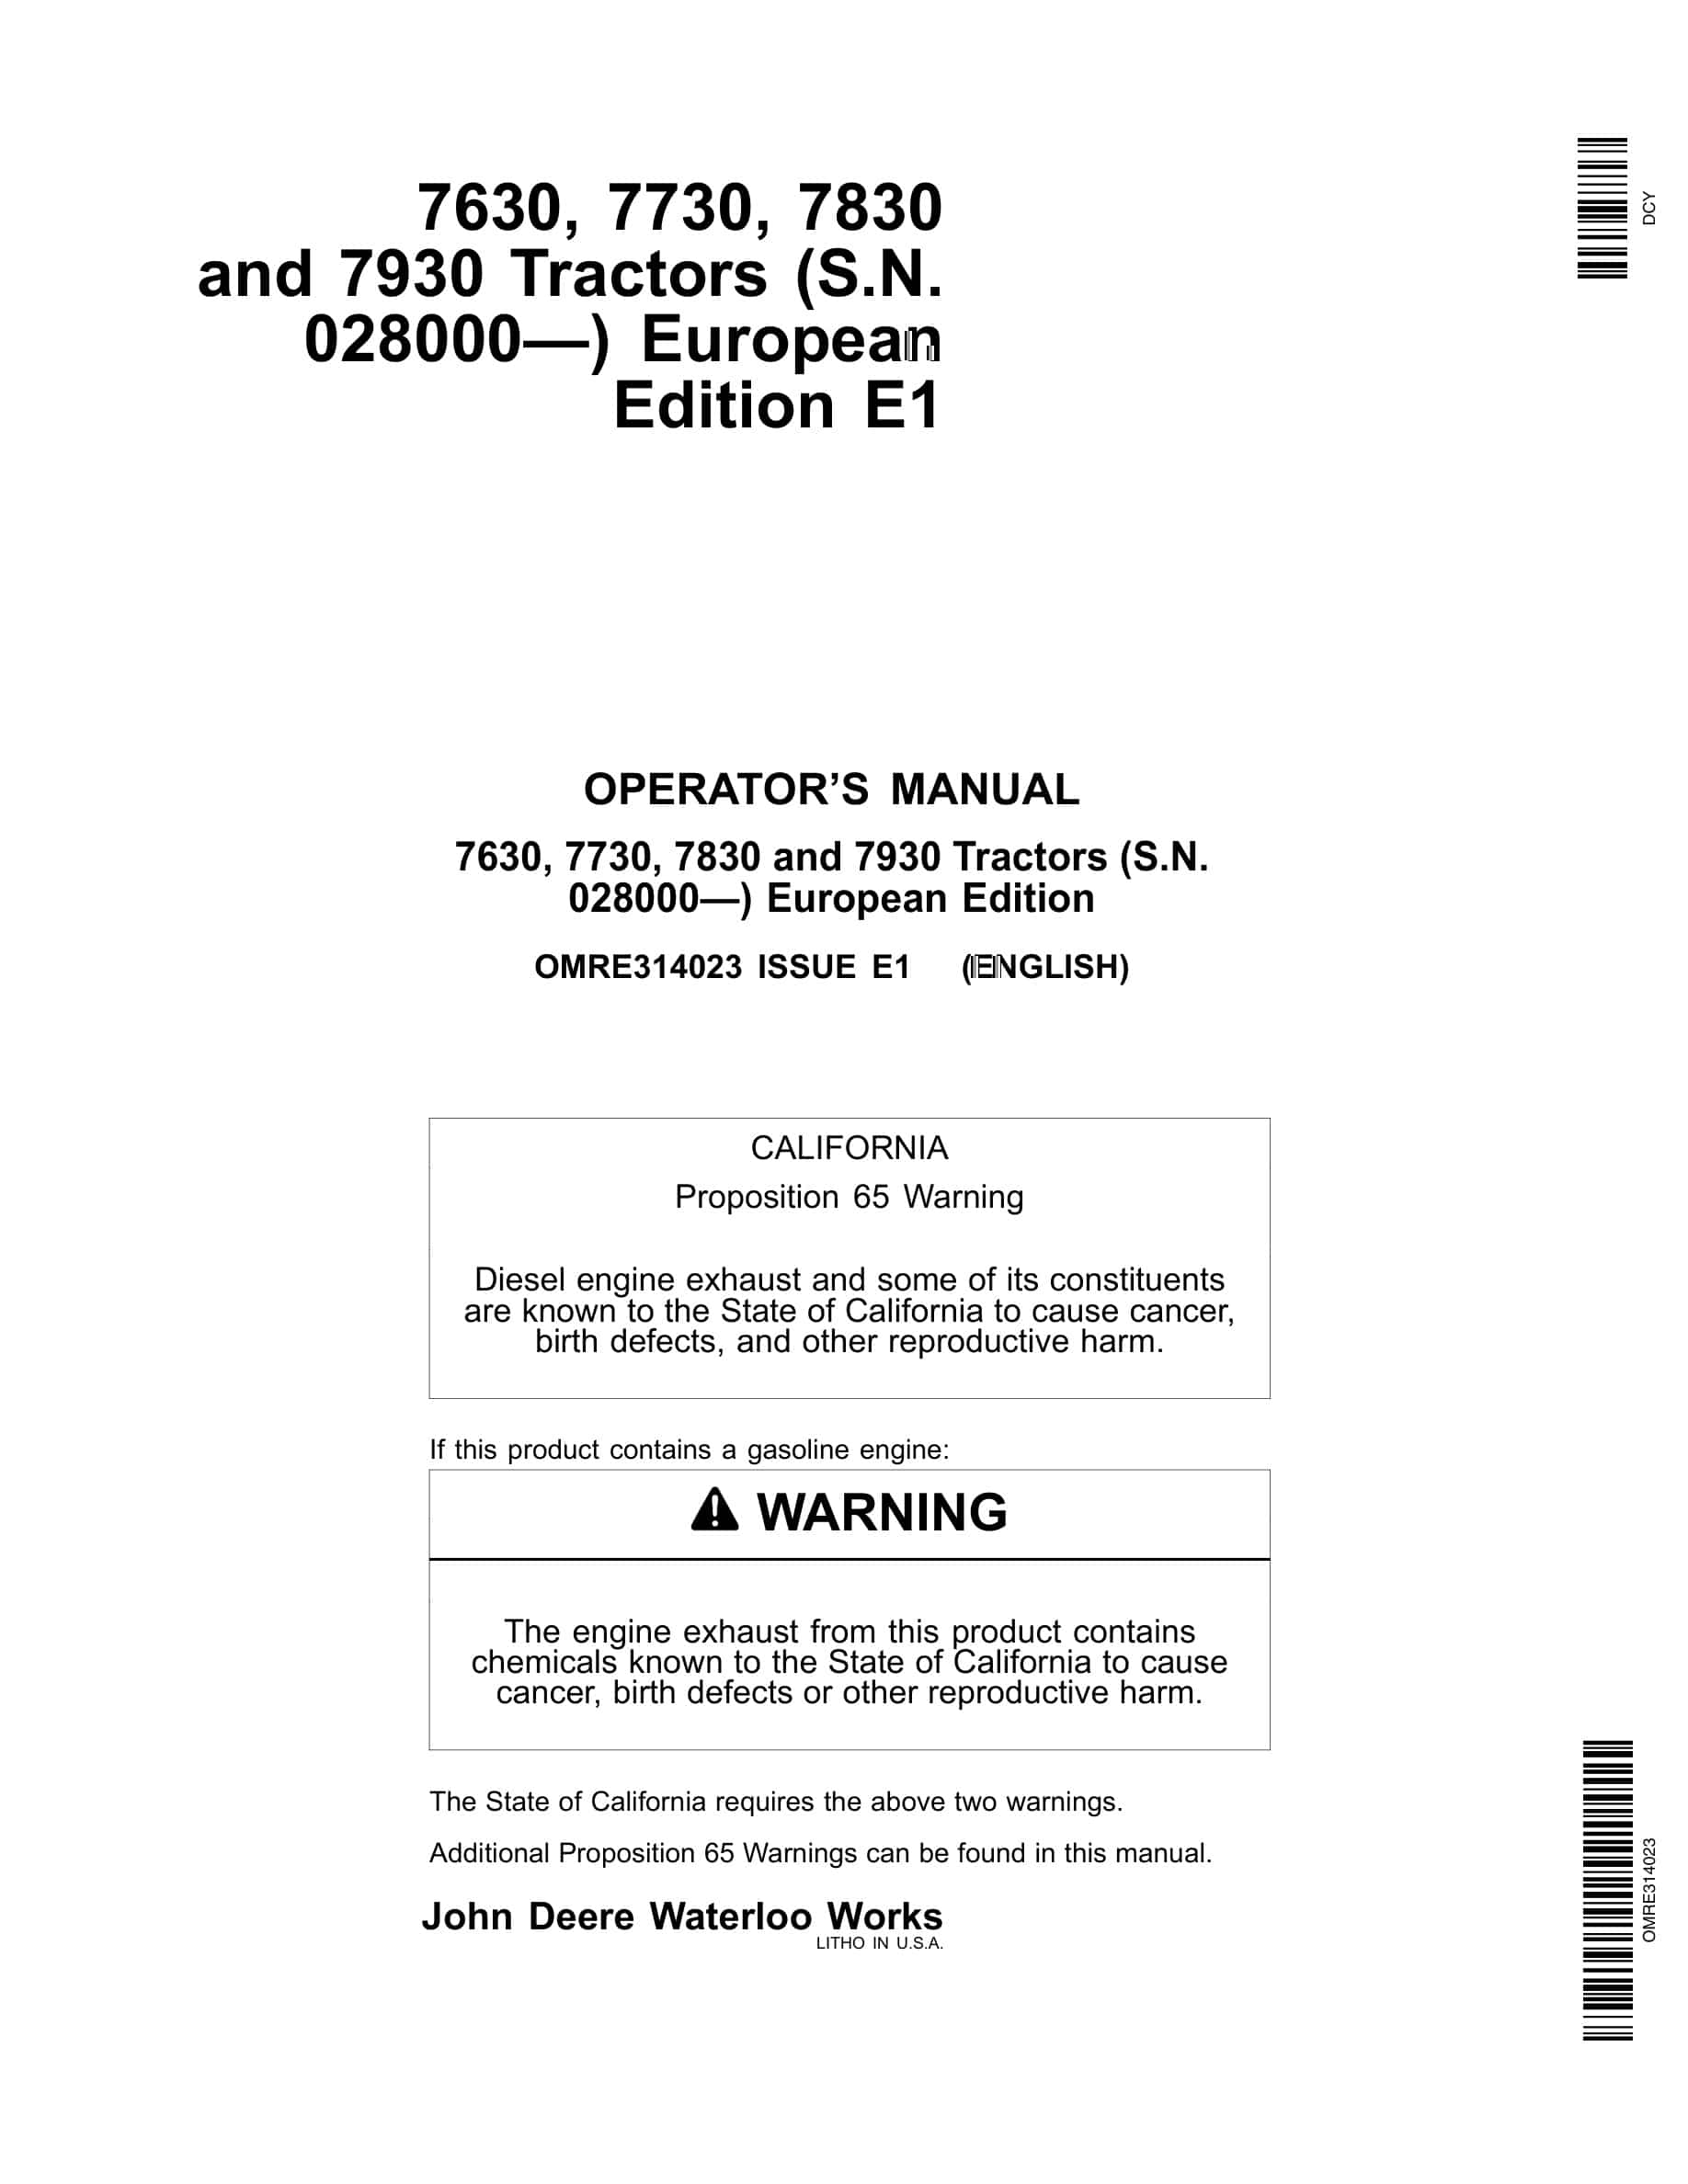 John Deere 7630, 7730, 7830 And 7930 Tractors Operator Manuals OMRE314023-1